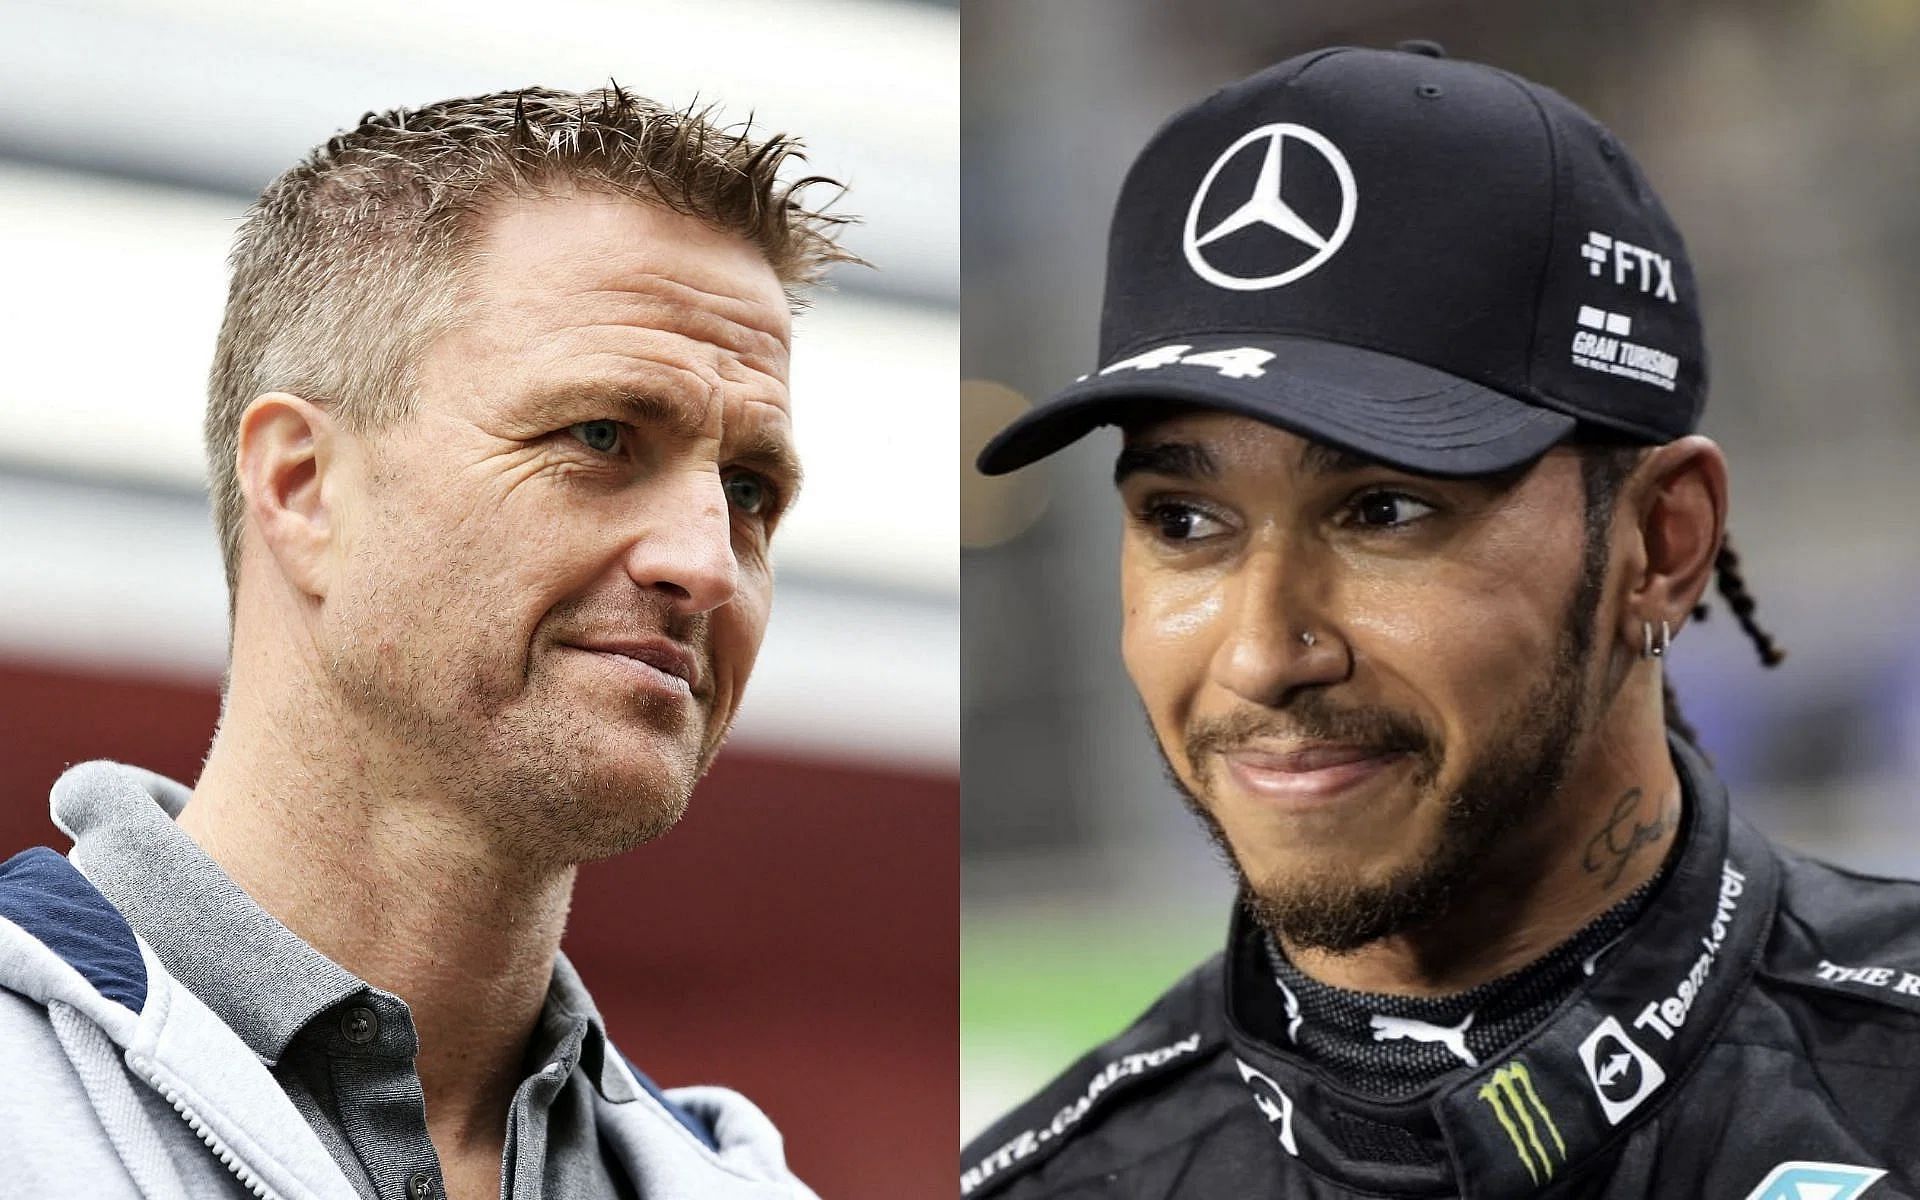 Ralf Schumacher (left) and Lewis Hamilton (right)